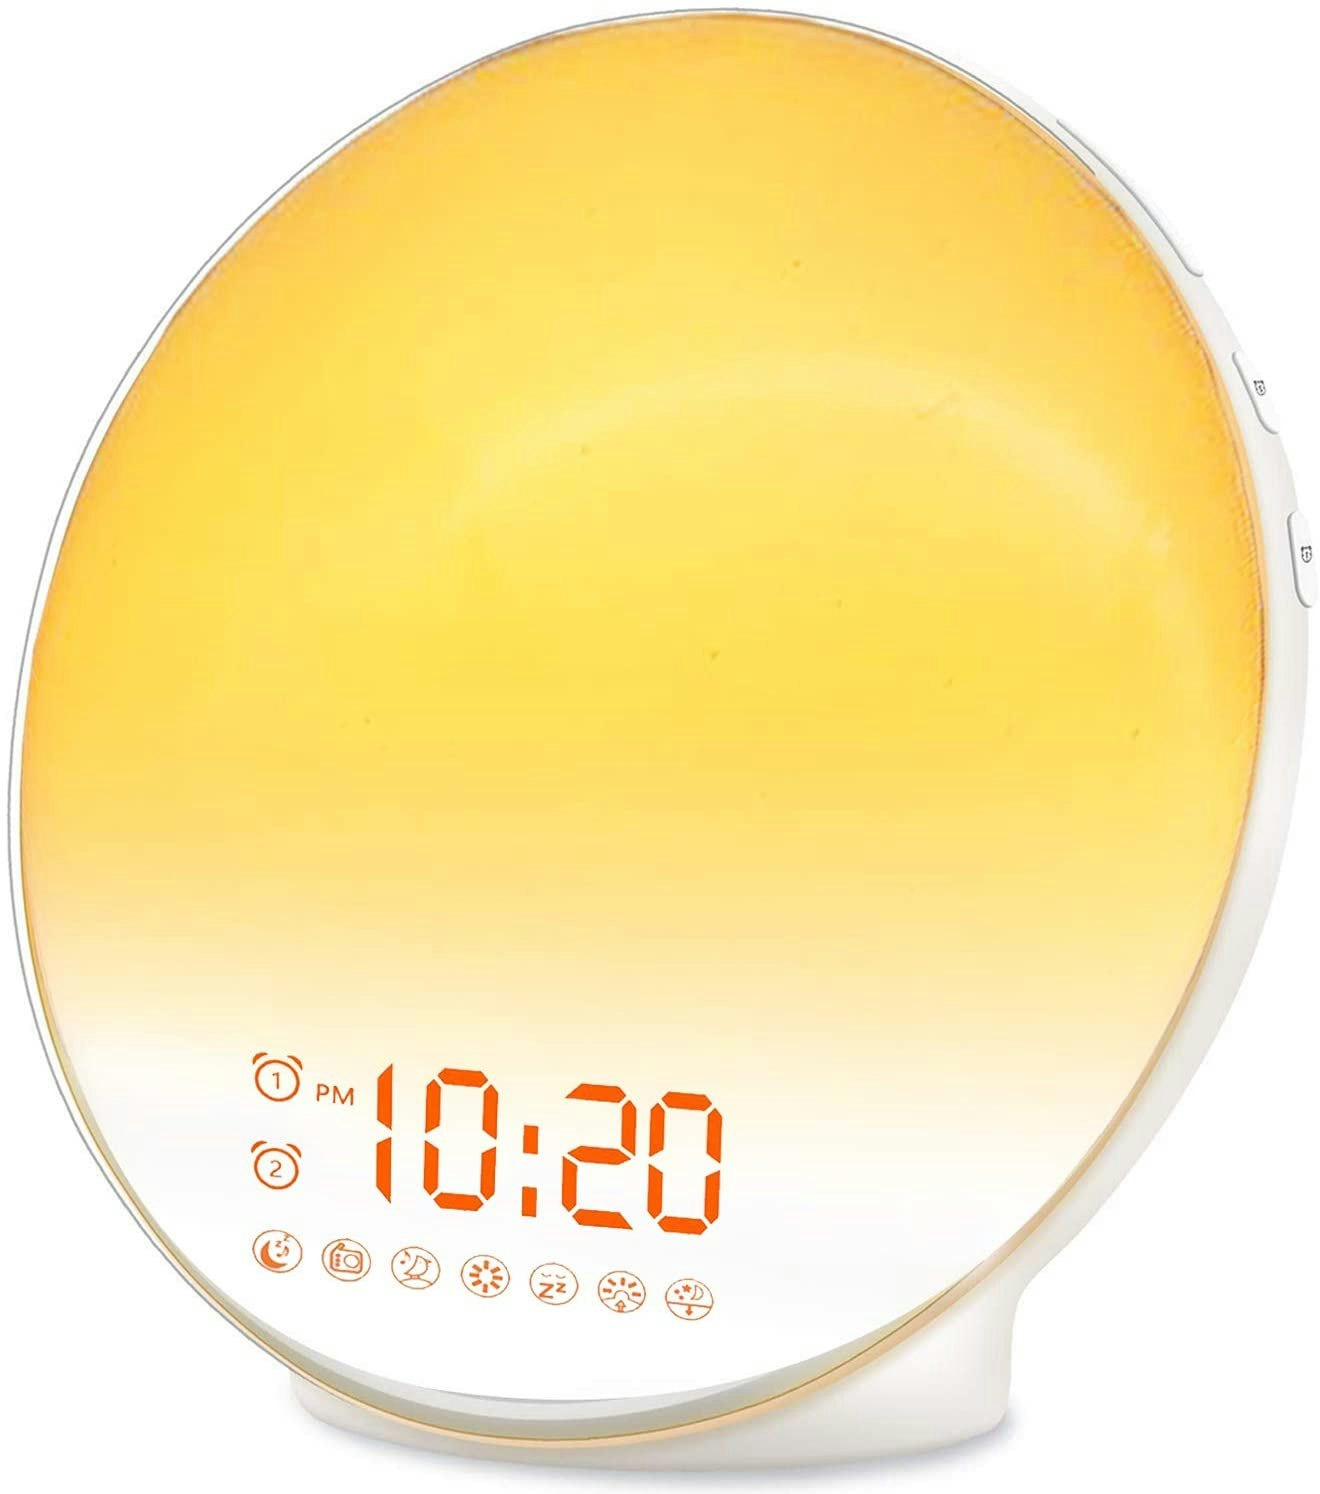 jall sunrise alarm clock user manual